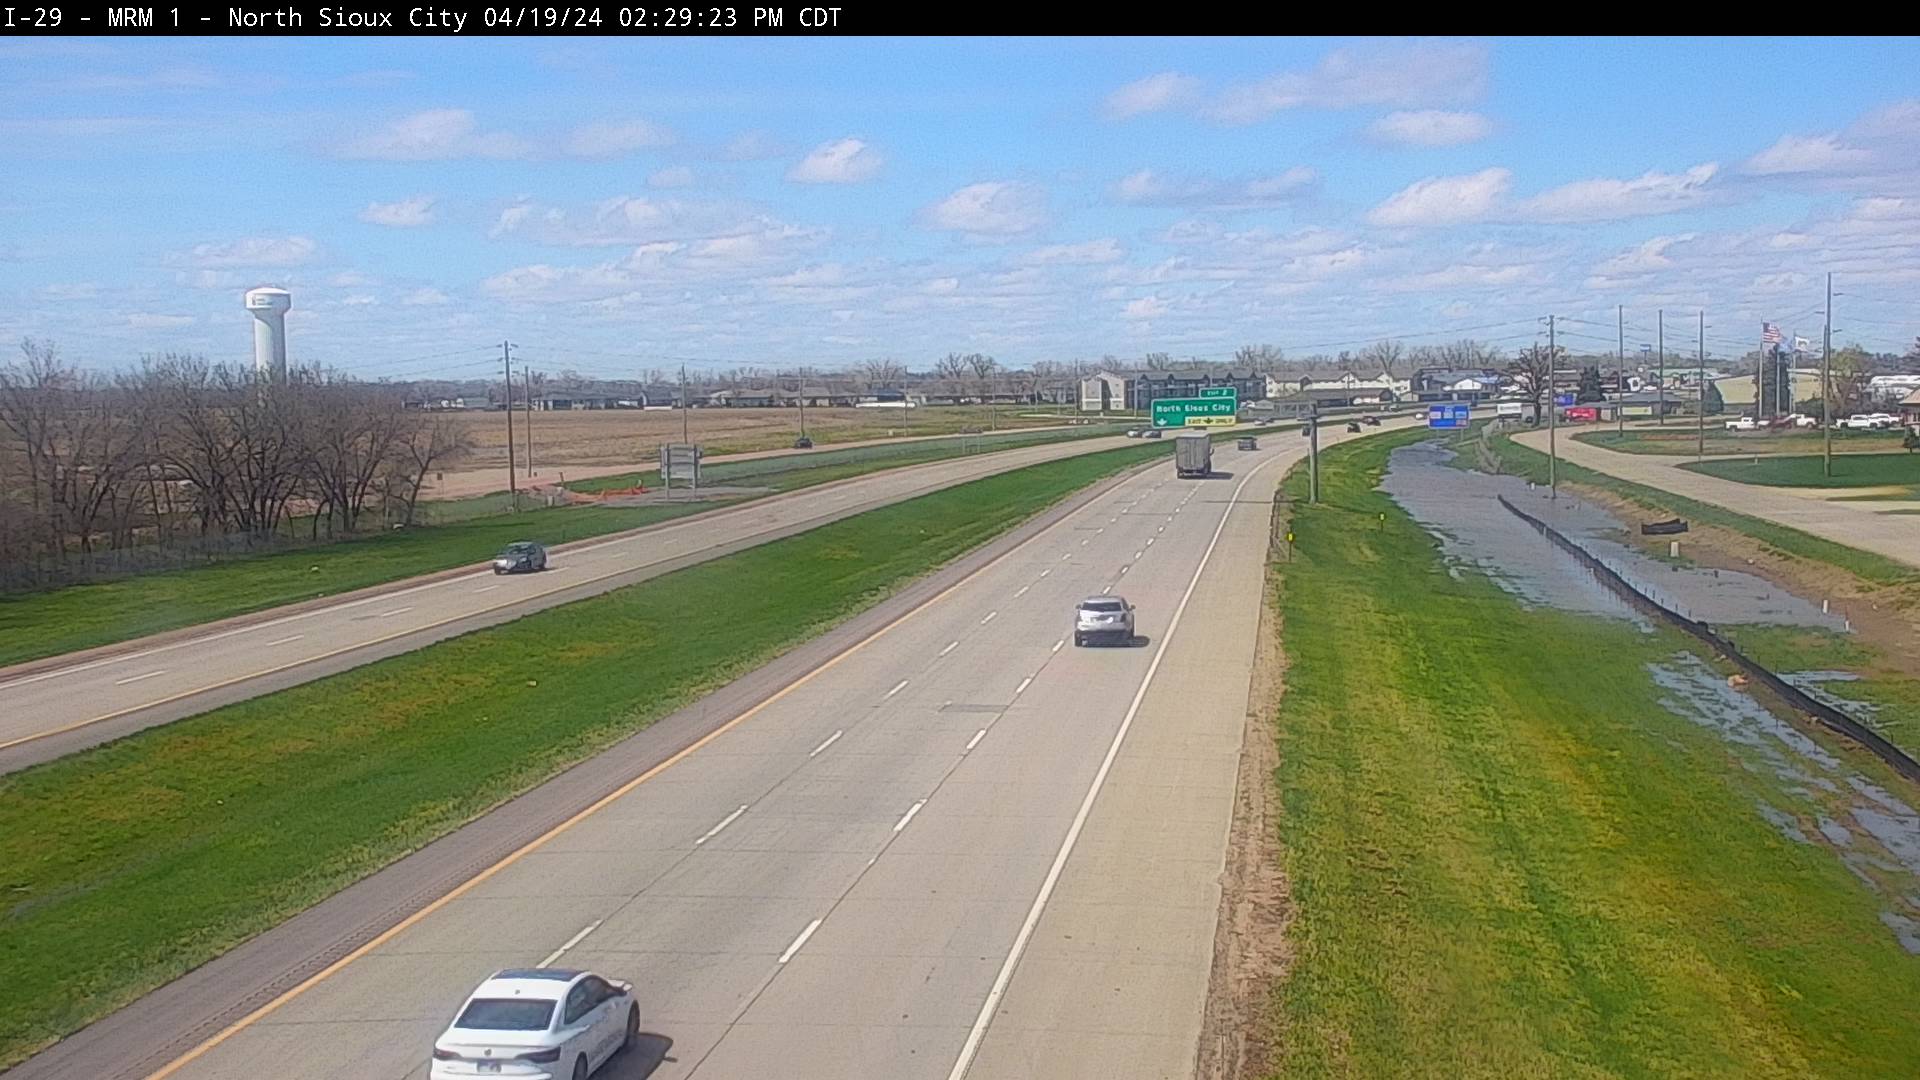 2 miles north of town along I-29 @ MP 2 - North Traffic Camera